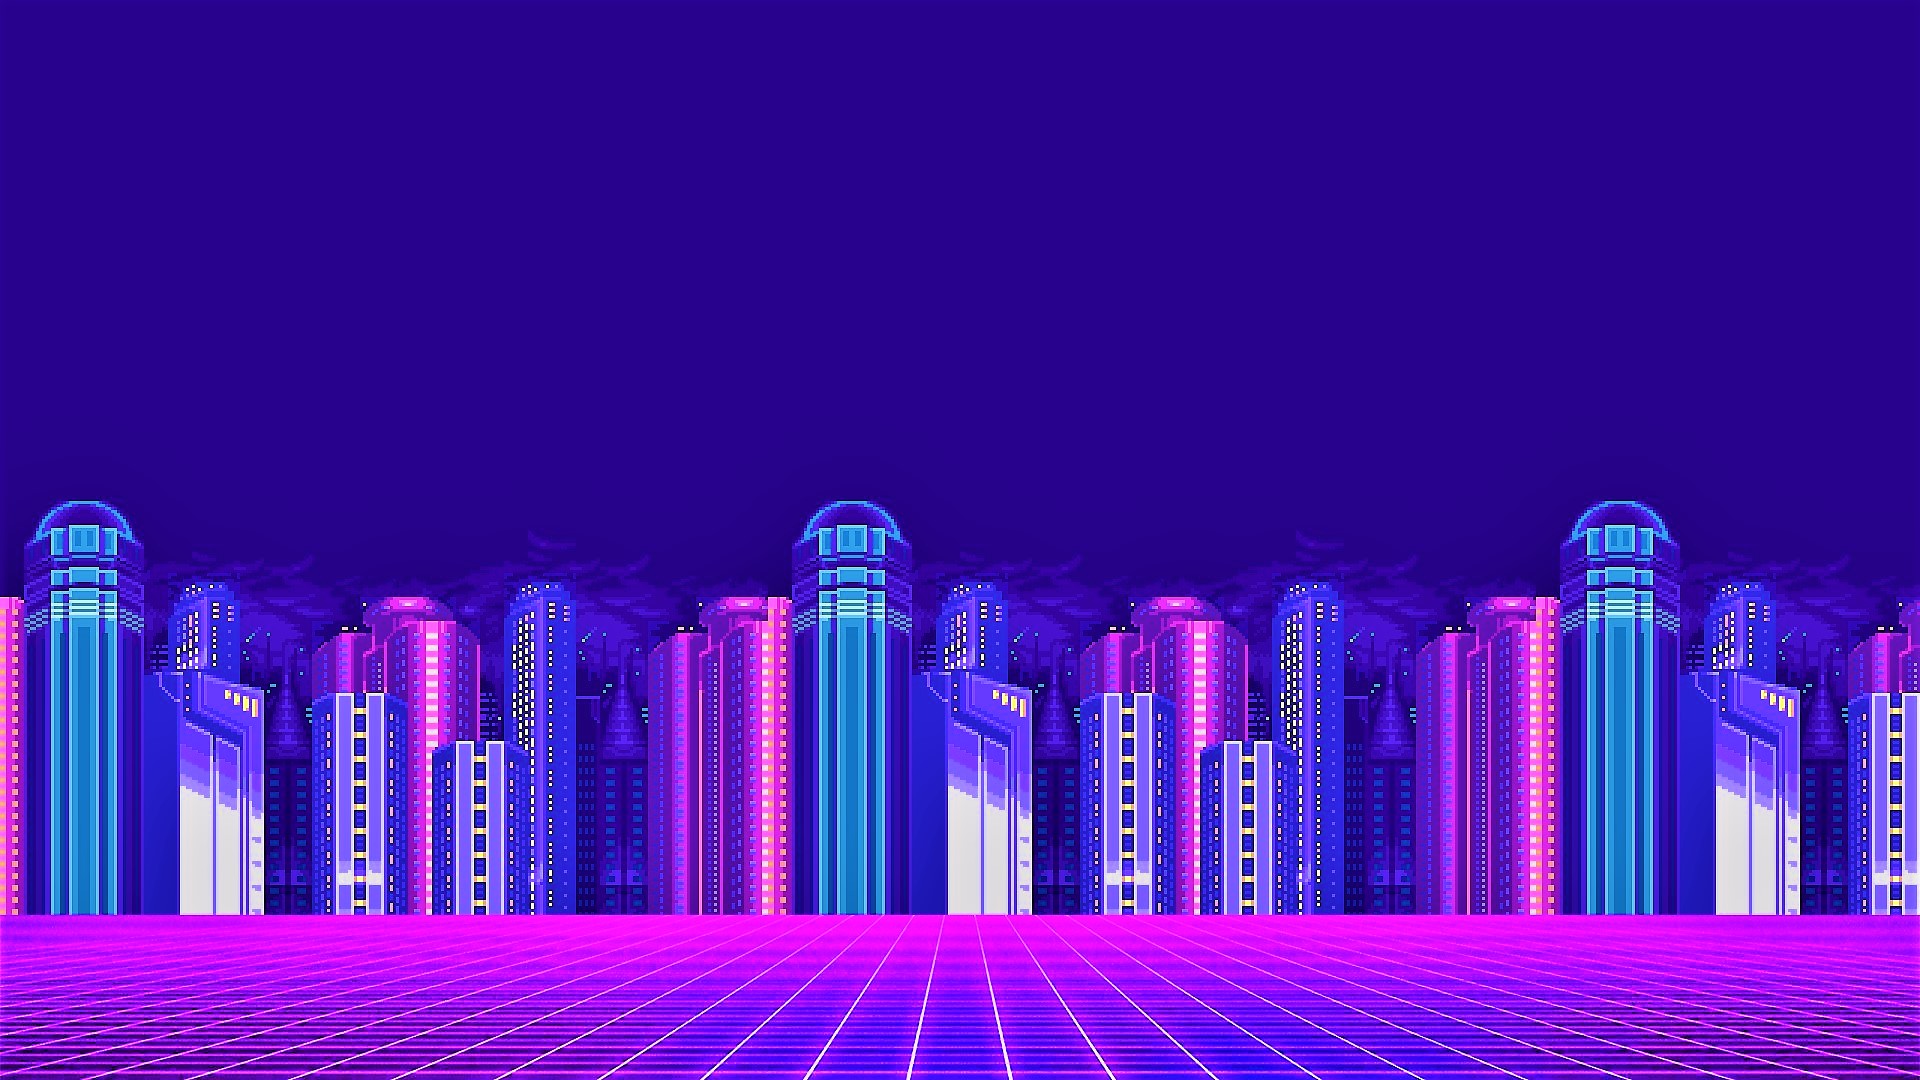 Neon City HD Wallpaper | Background Image | 1920x1080 | ID ...